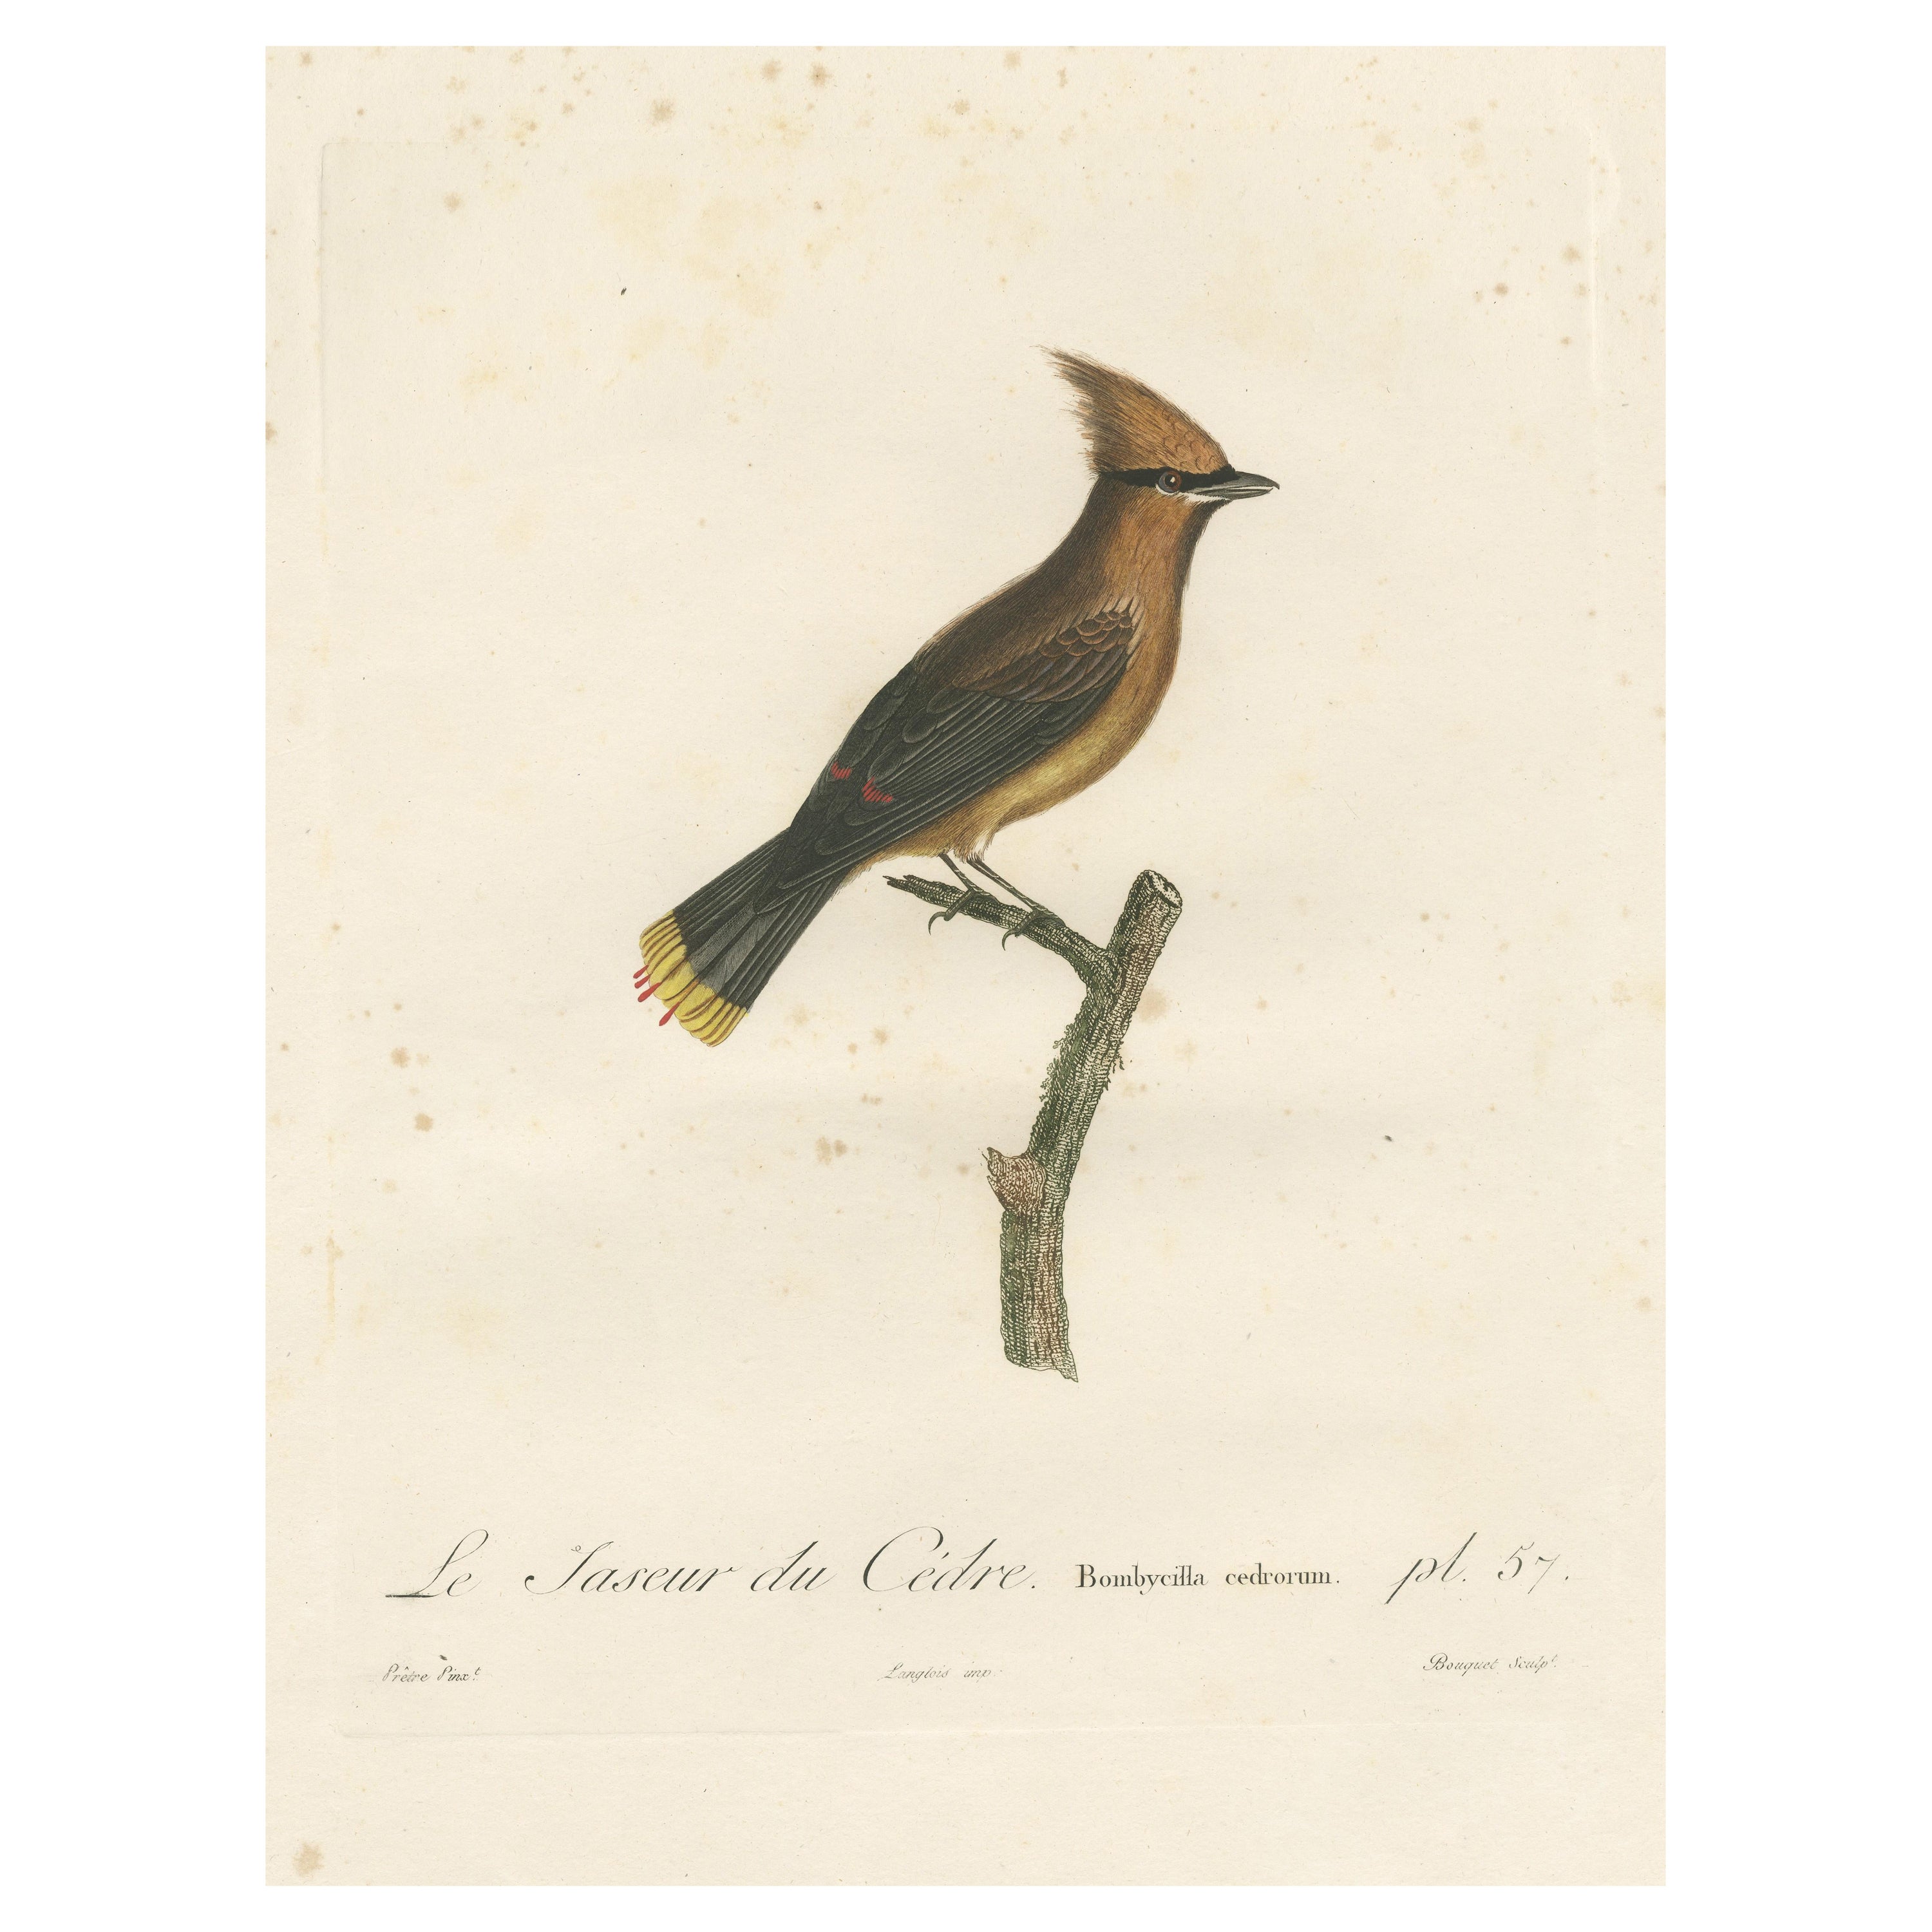 1807 Cedar Waxwing Print - Original Handcolored Bird Illustration by Vieillot